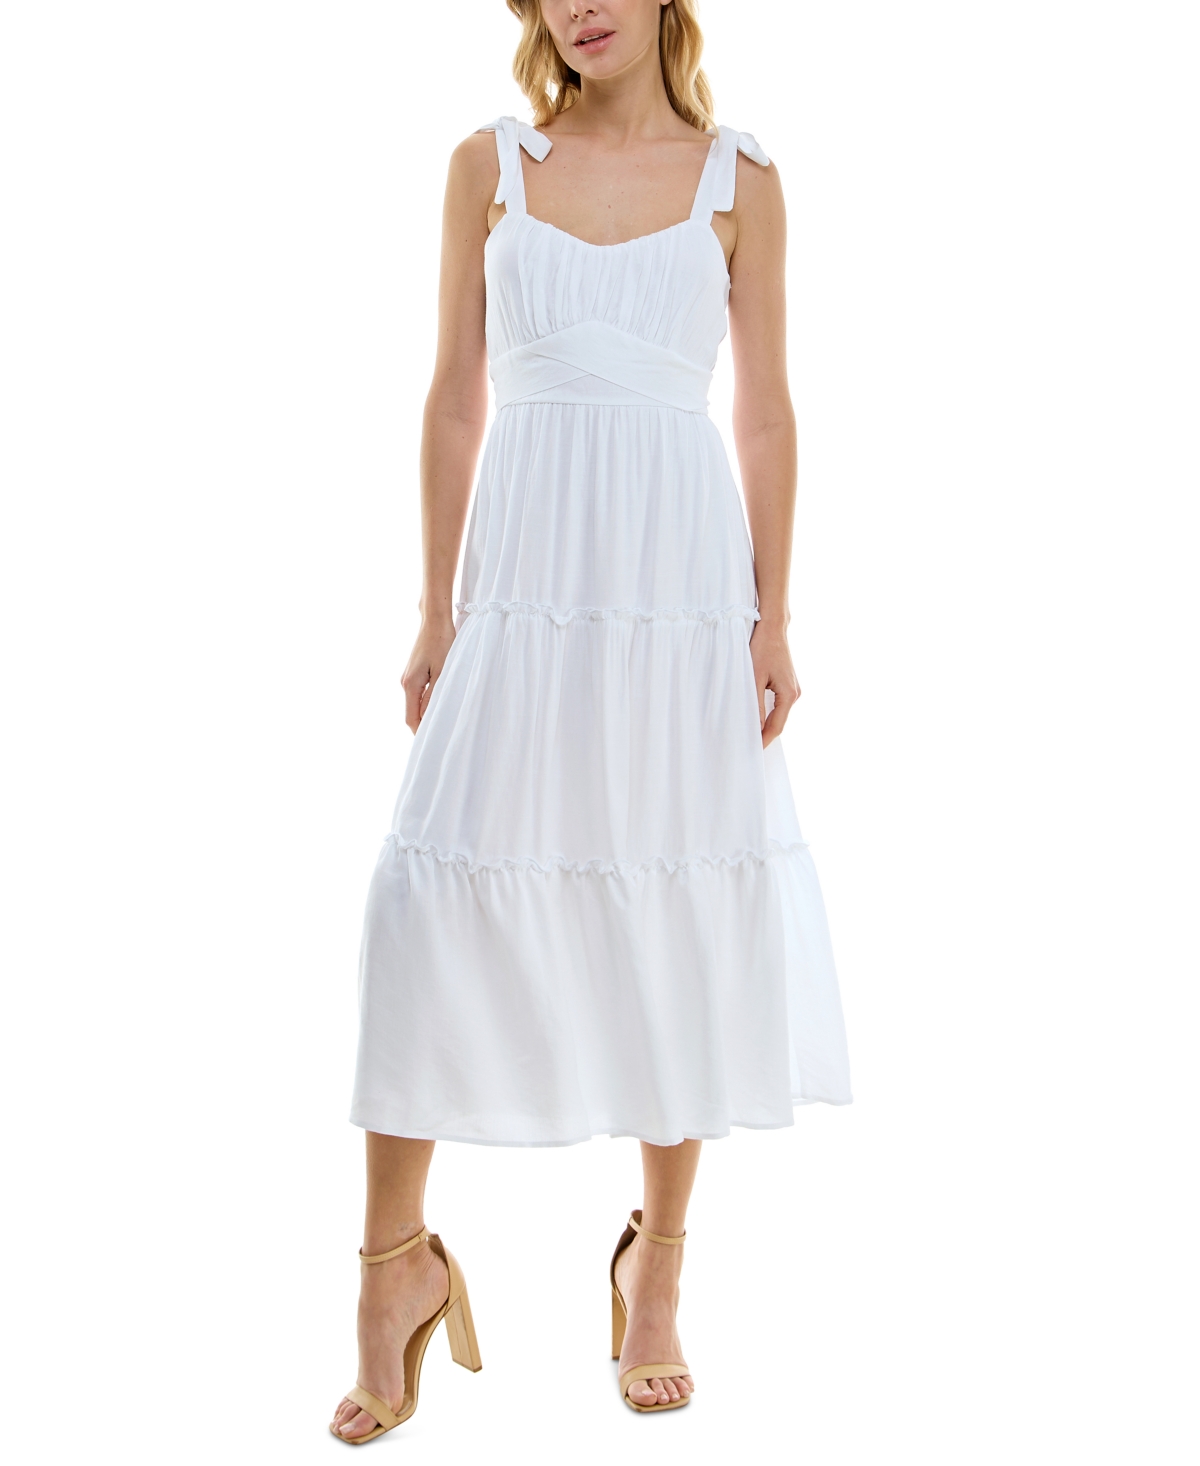 Women's Tied Ruffle Fit & Flare Midi Dress - White